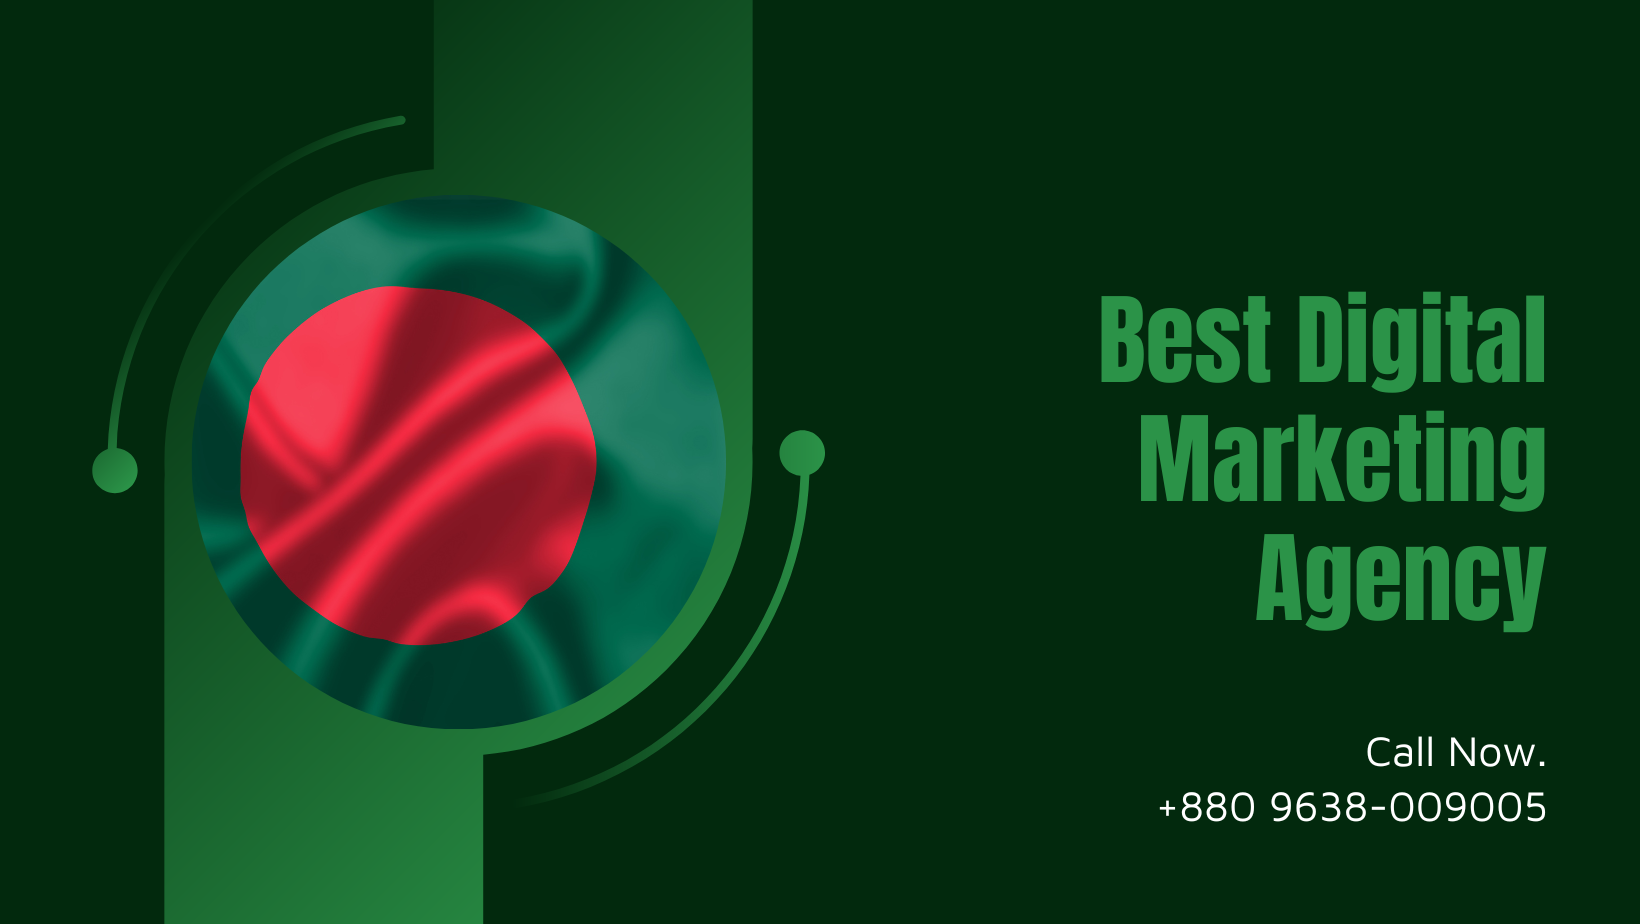 Best Digital Marketing Agency in bangladesh